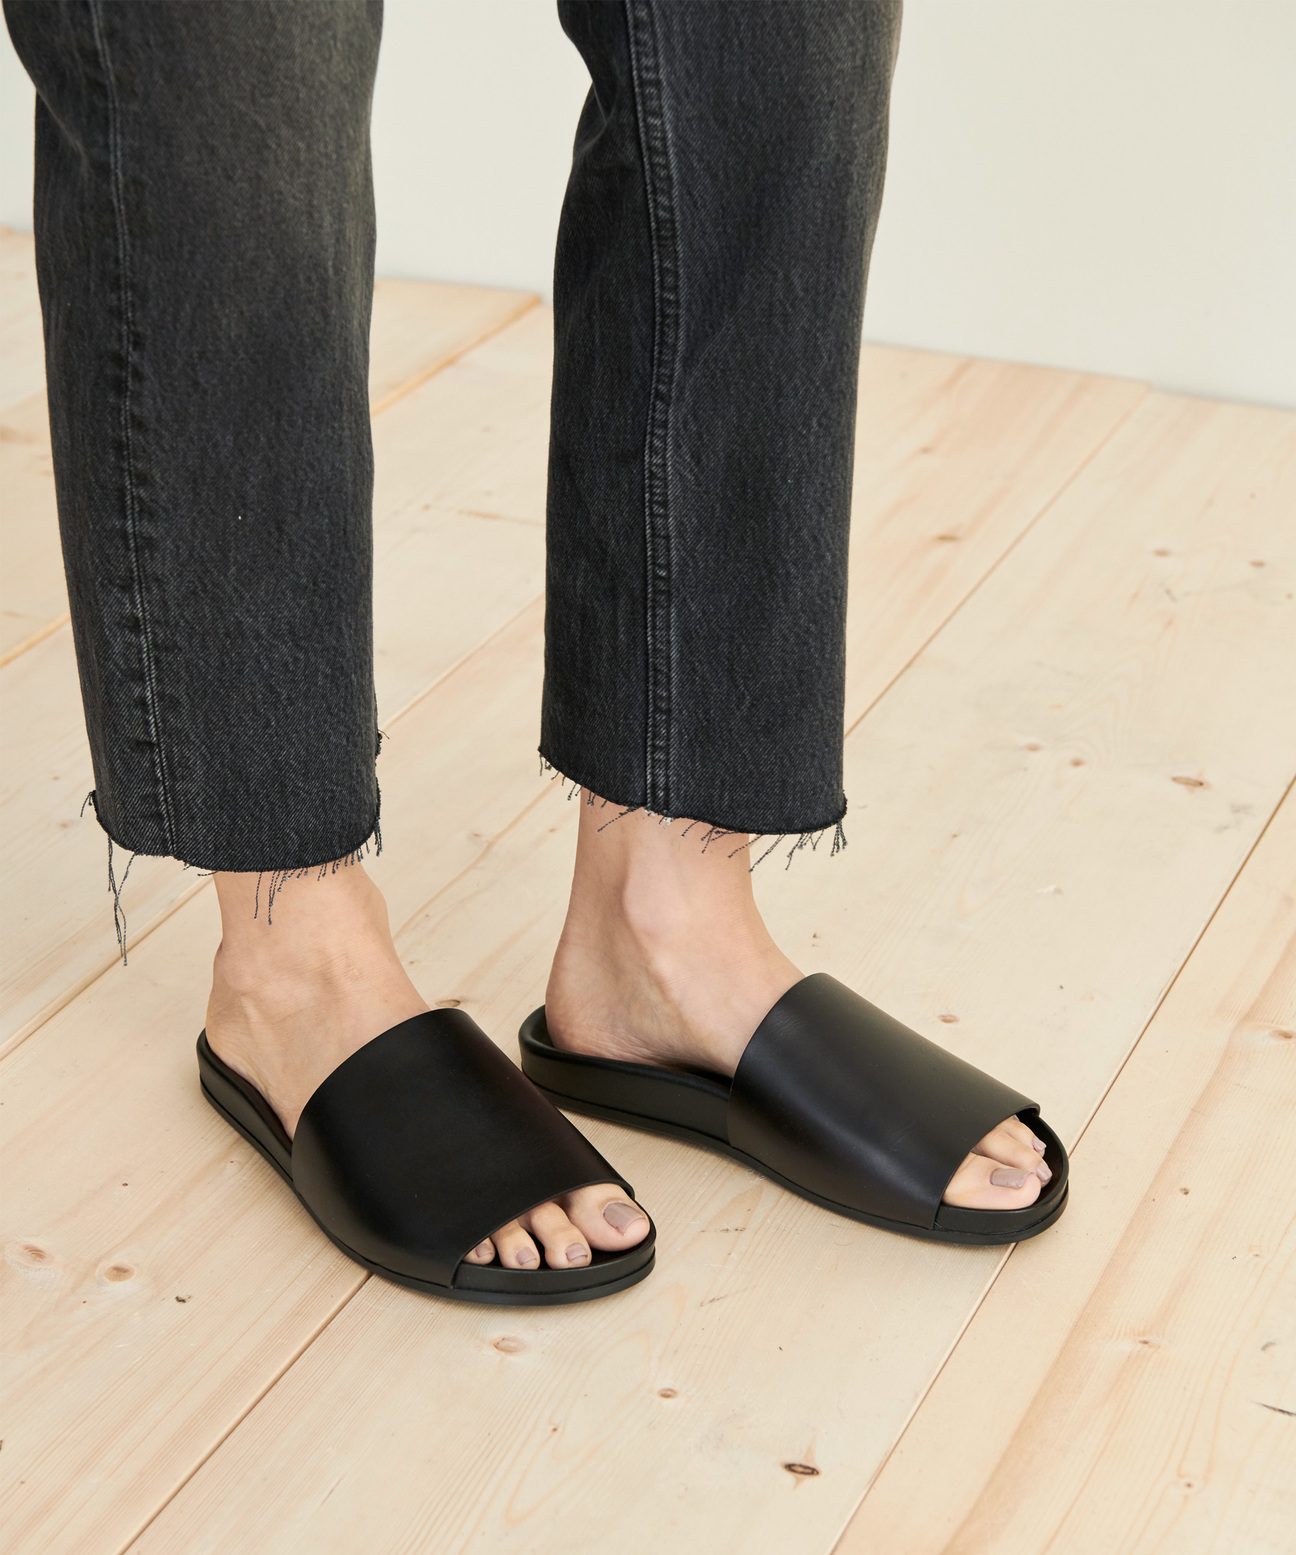 clarks ladies sandals size 6